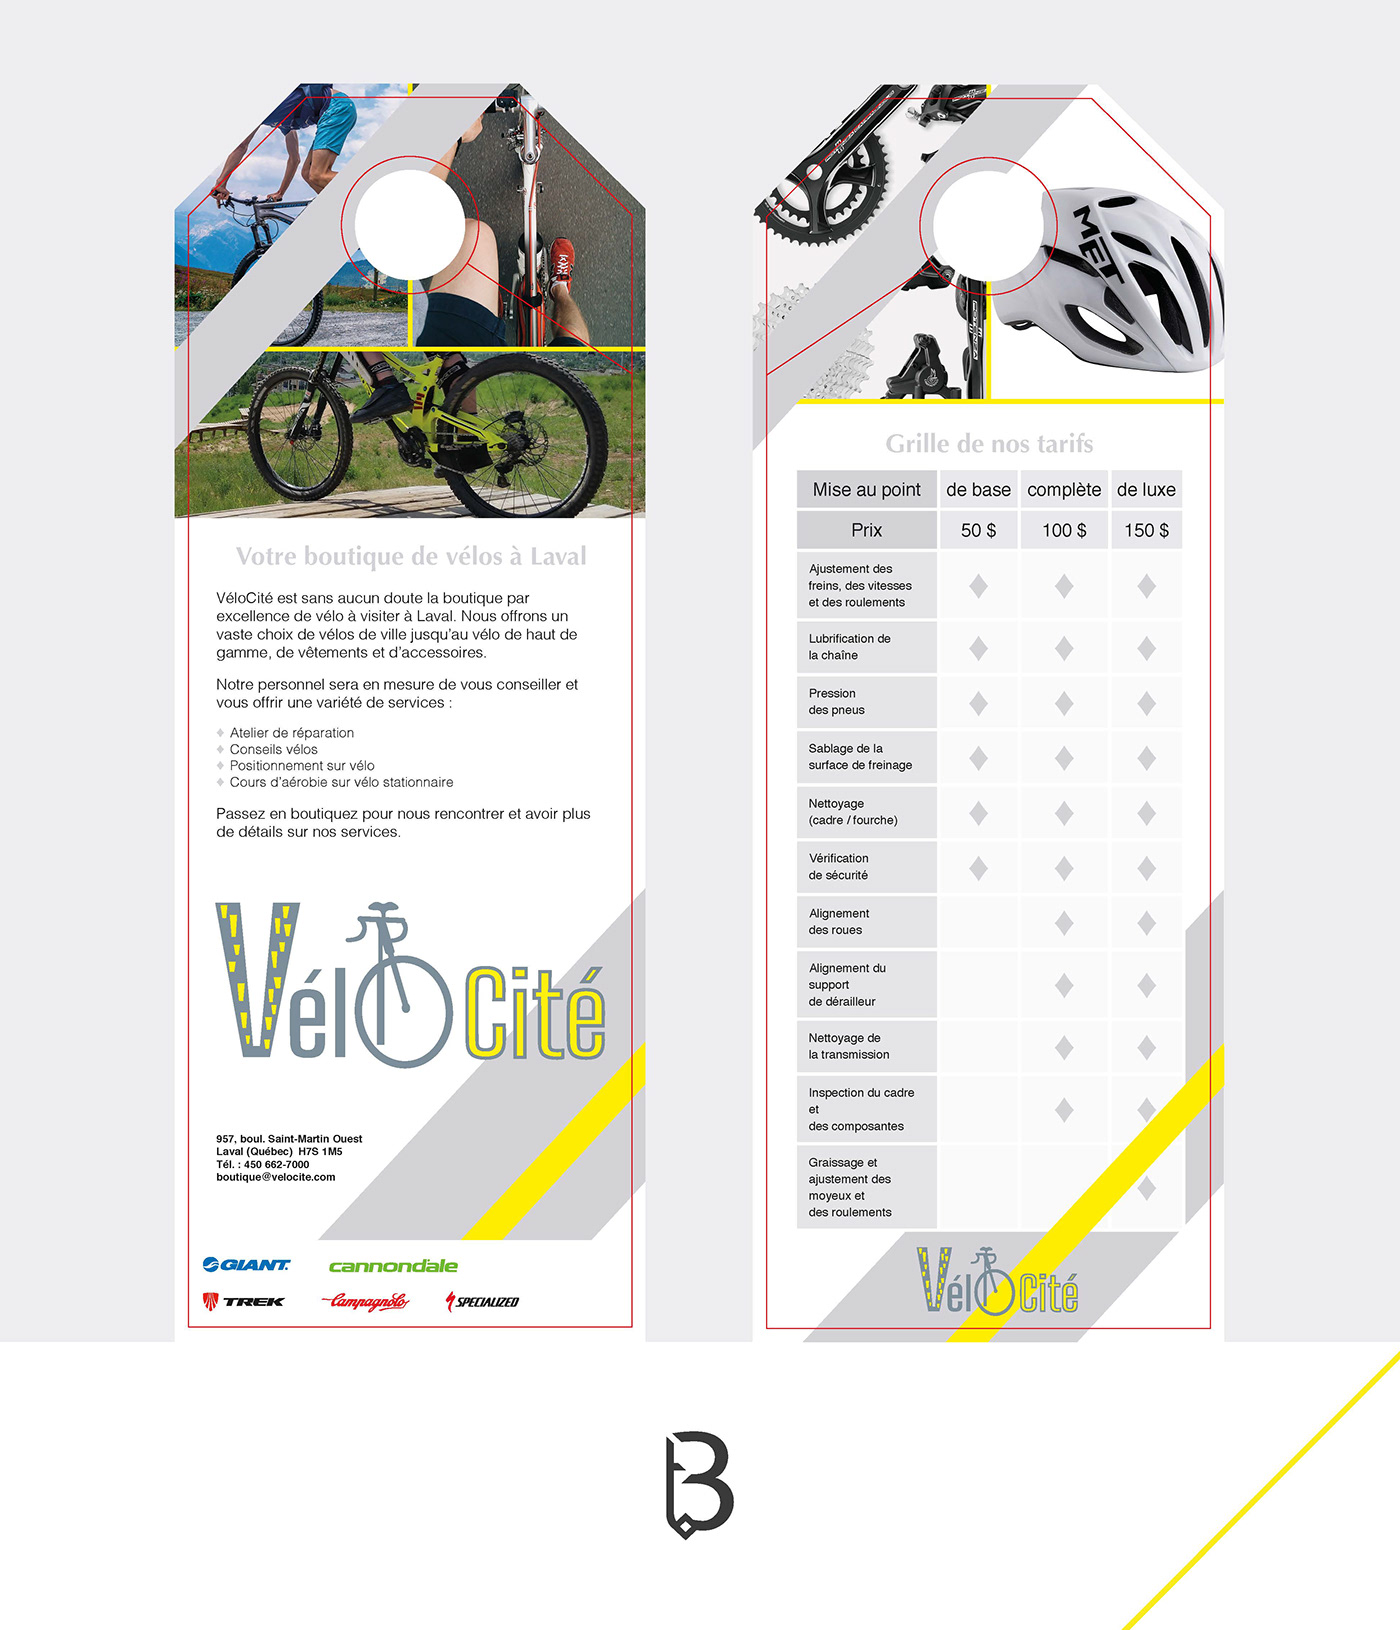 bikes ride velo adds Conception logo